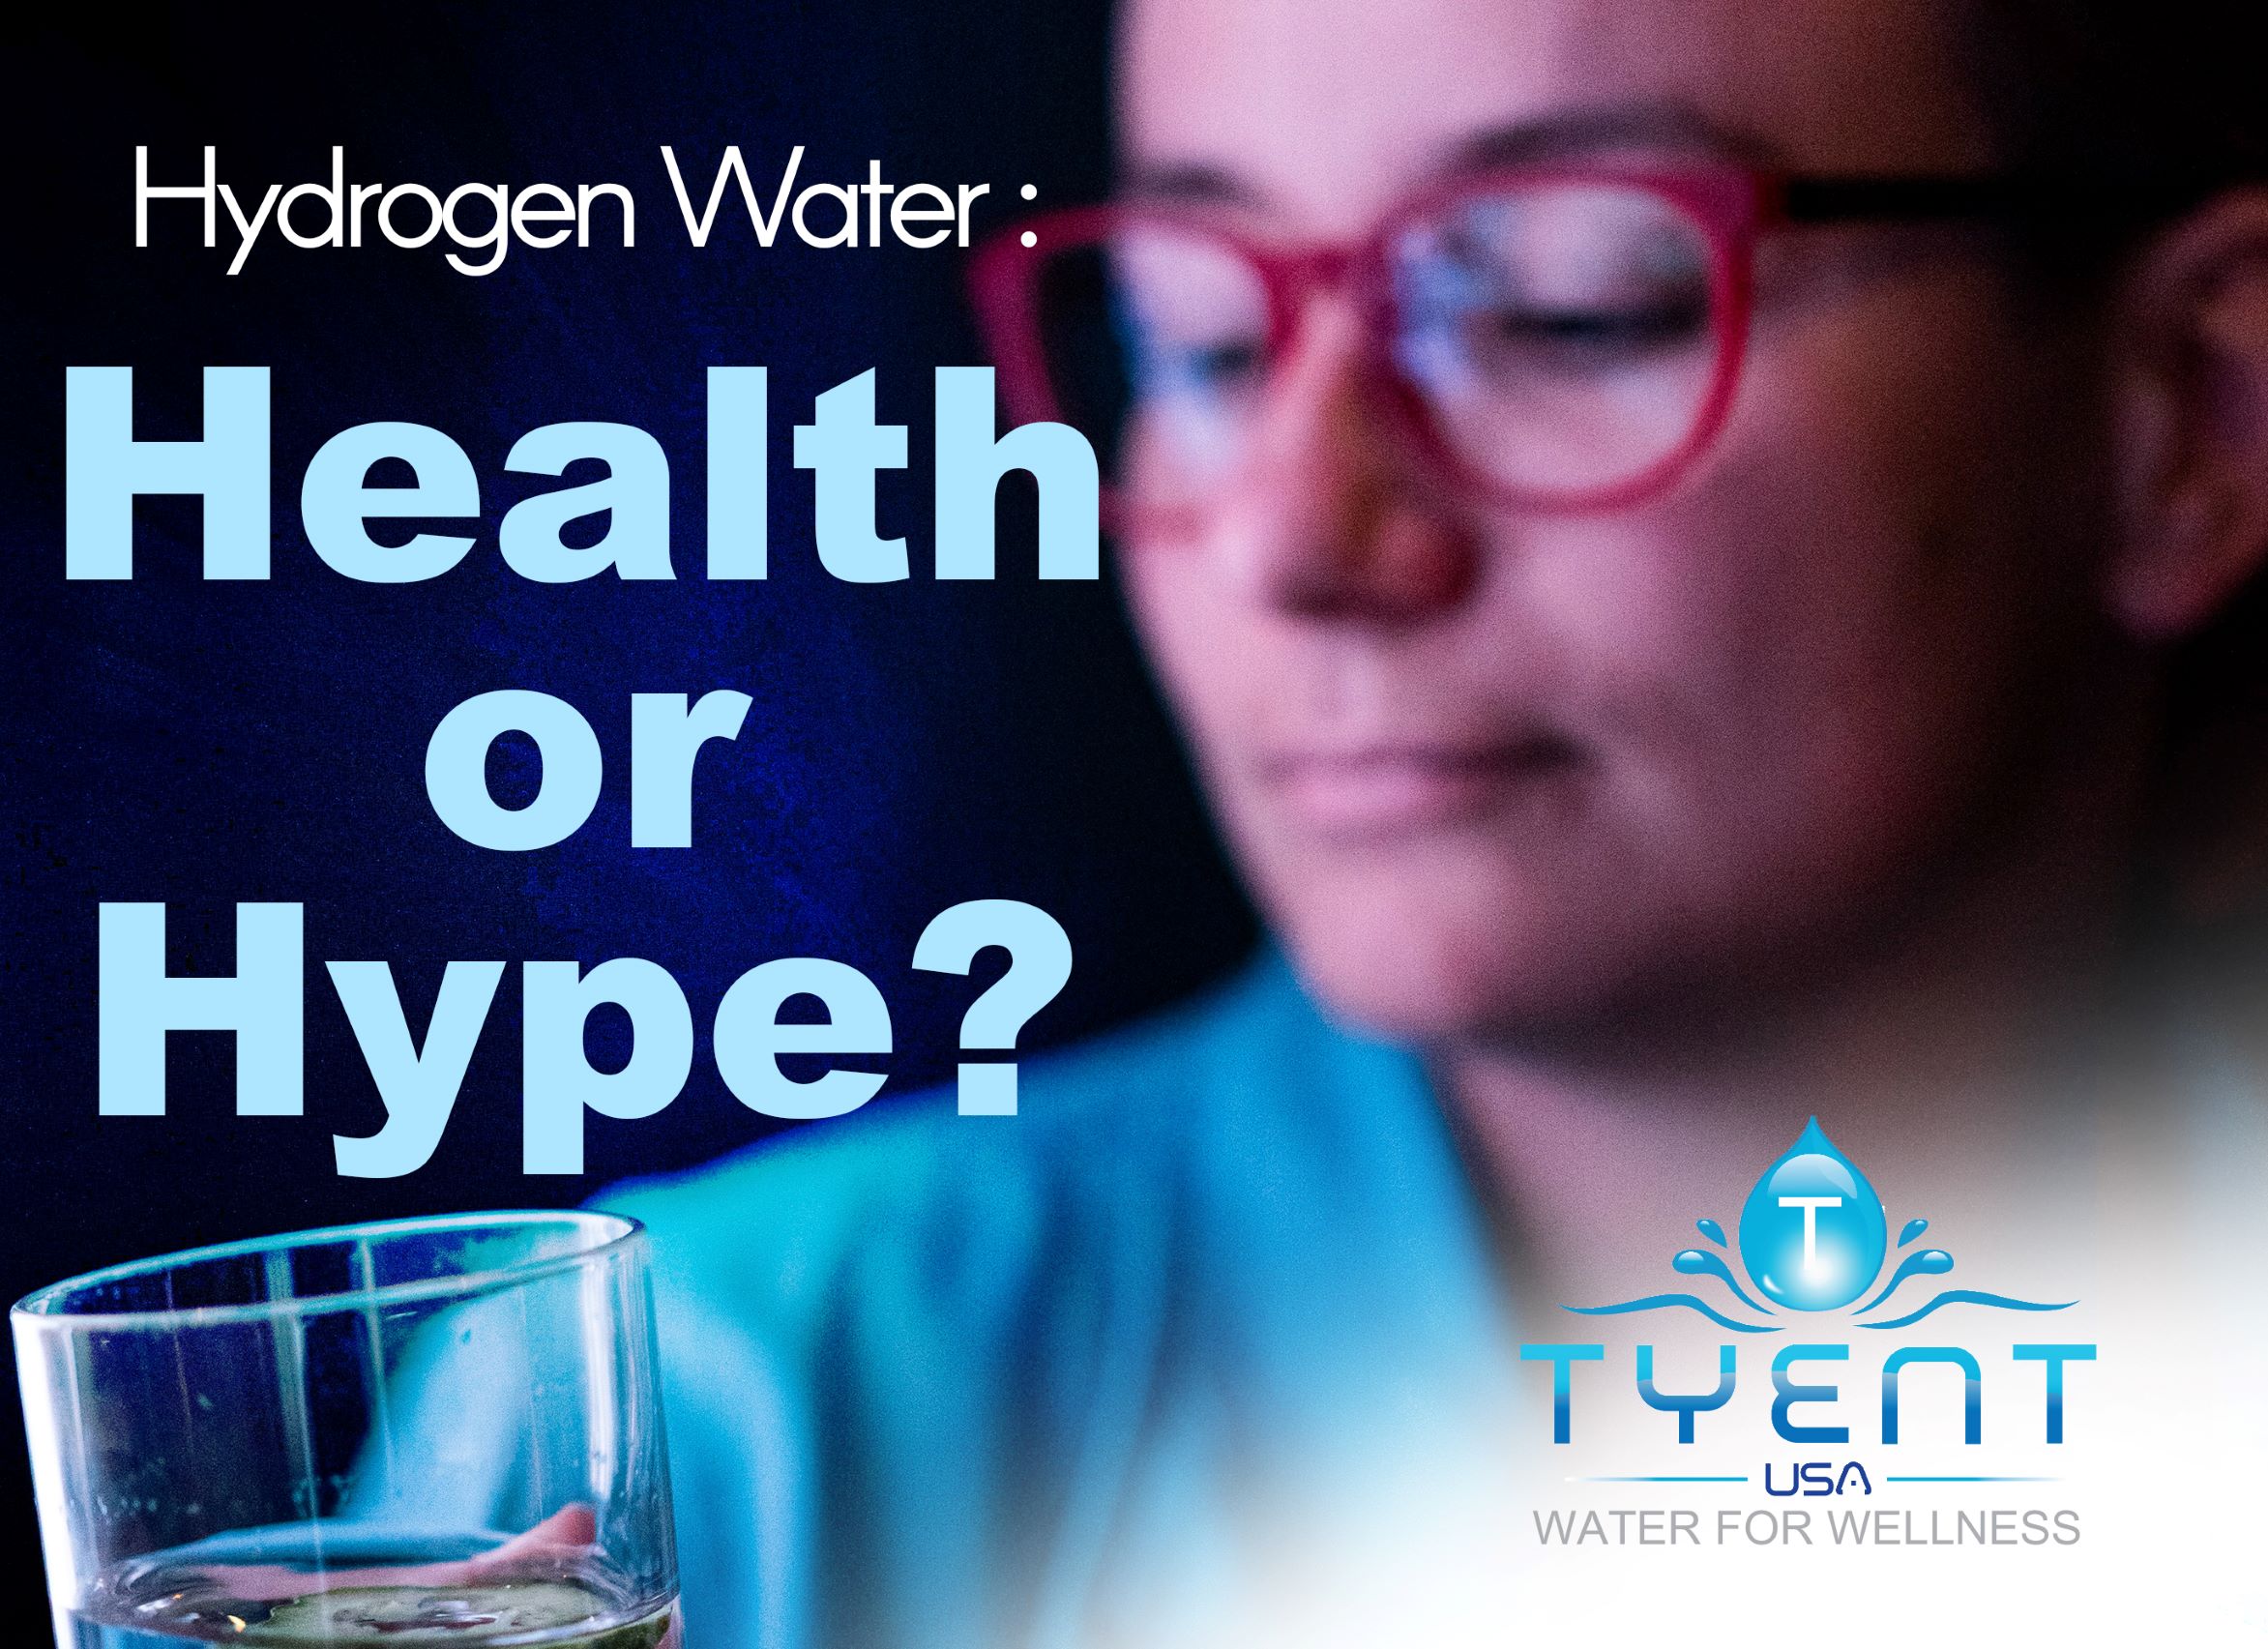 Hydrogen Water Health or Hype